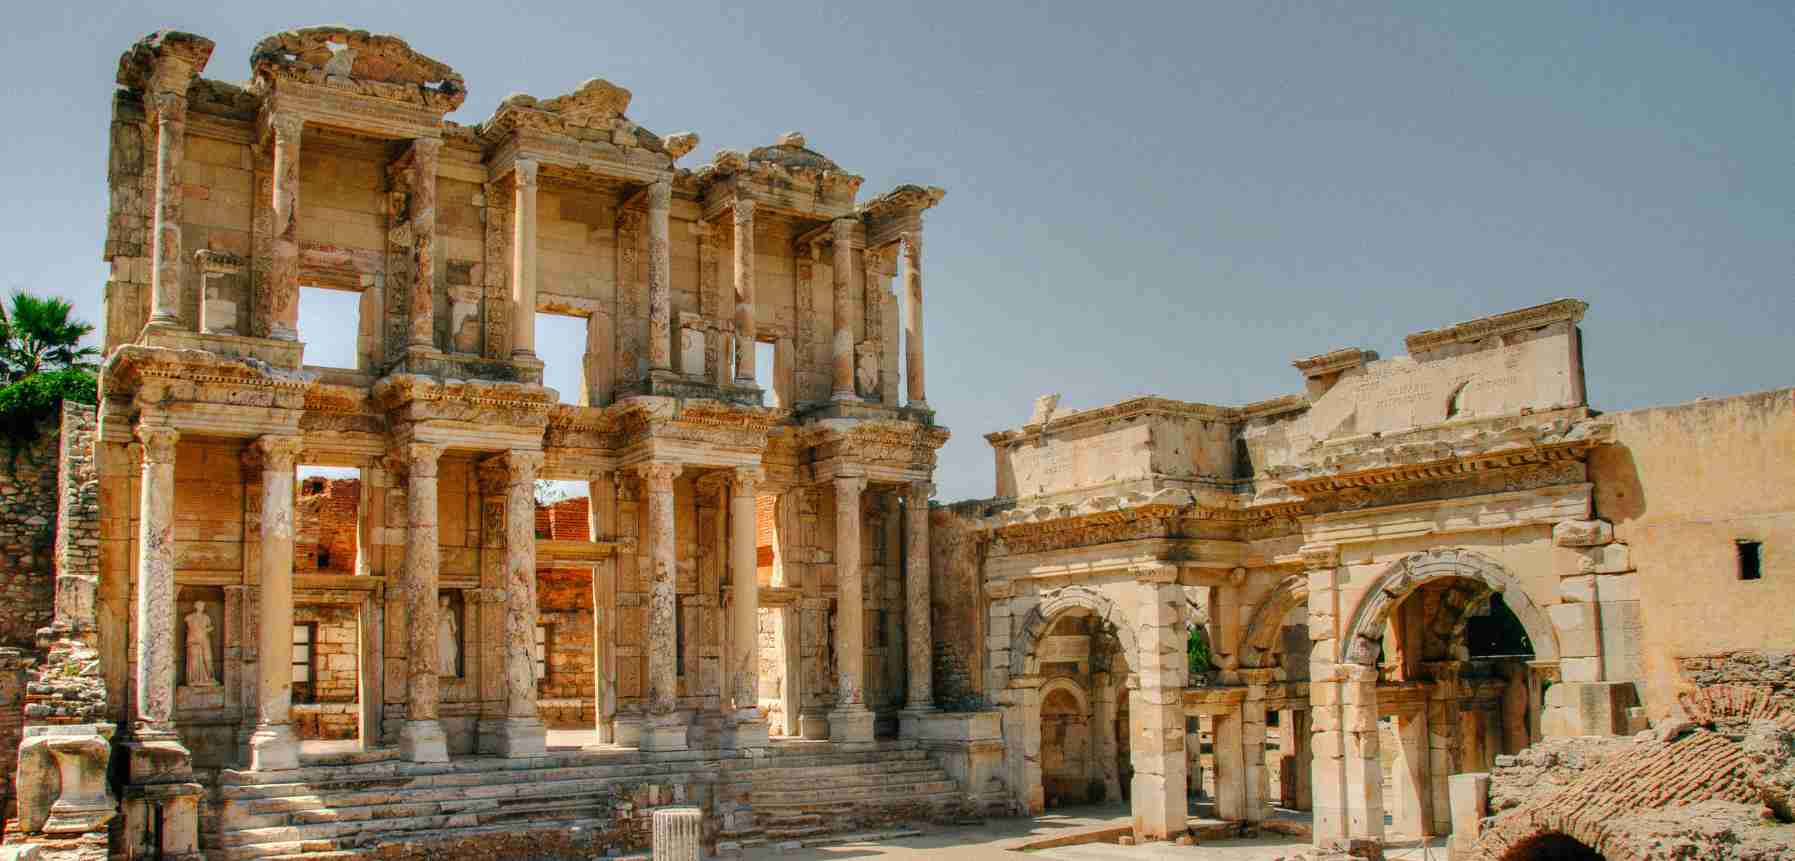 Ephesus: An Ancient City